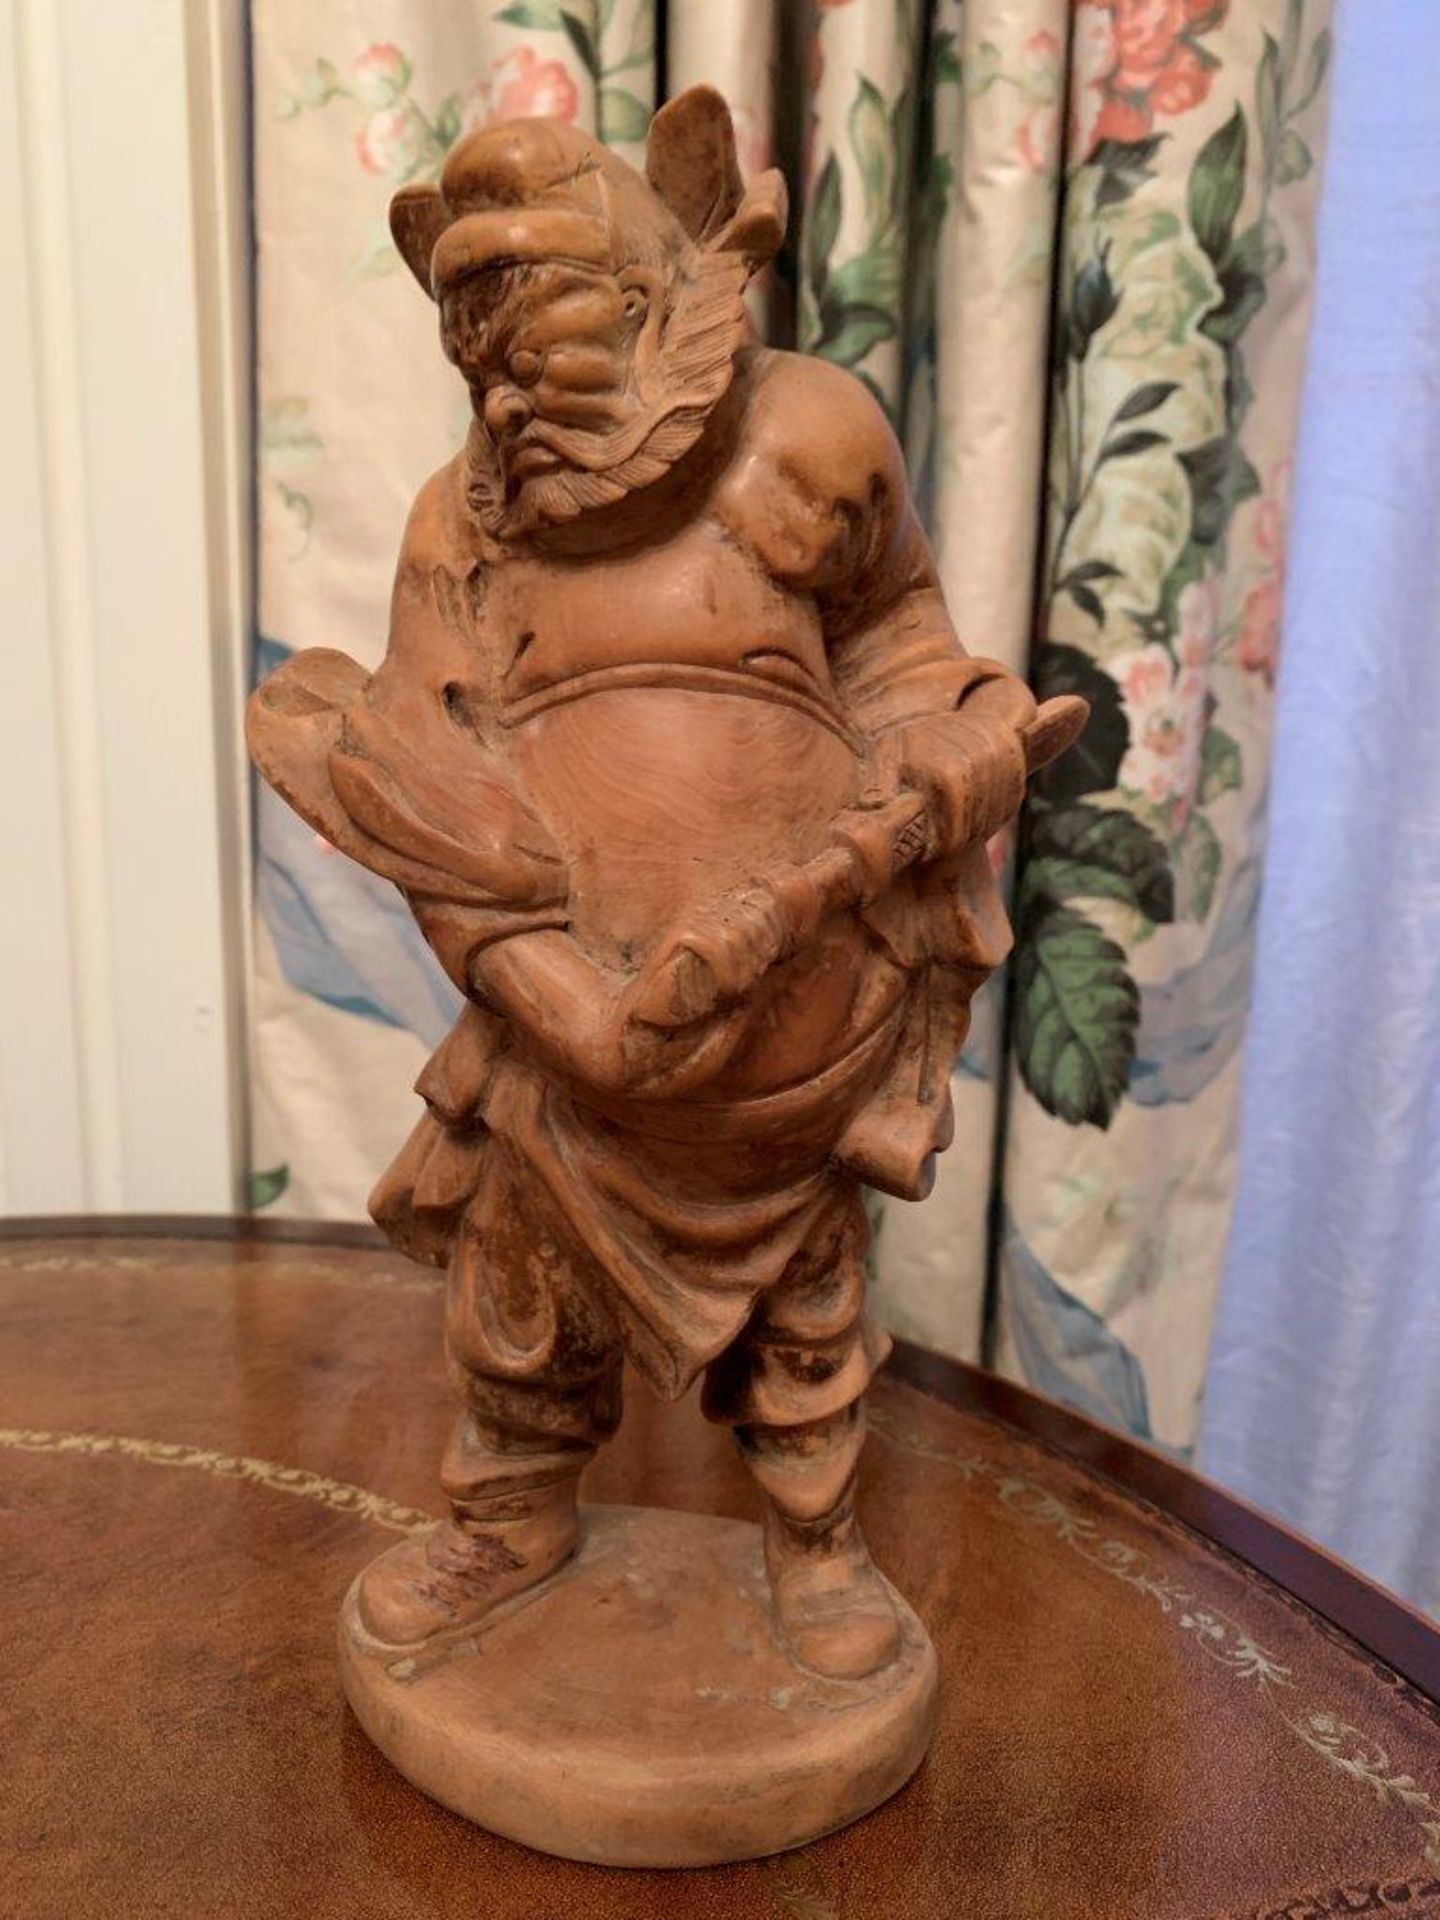 Wooden carving of a Samurai